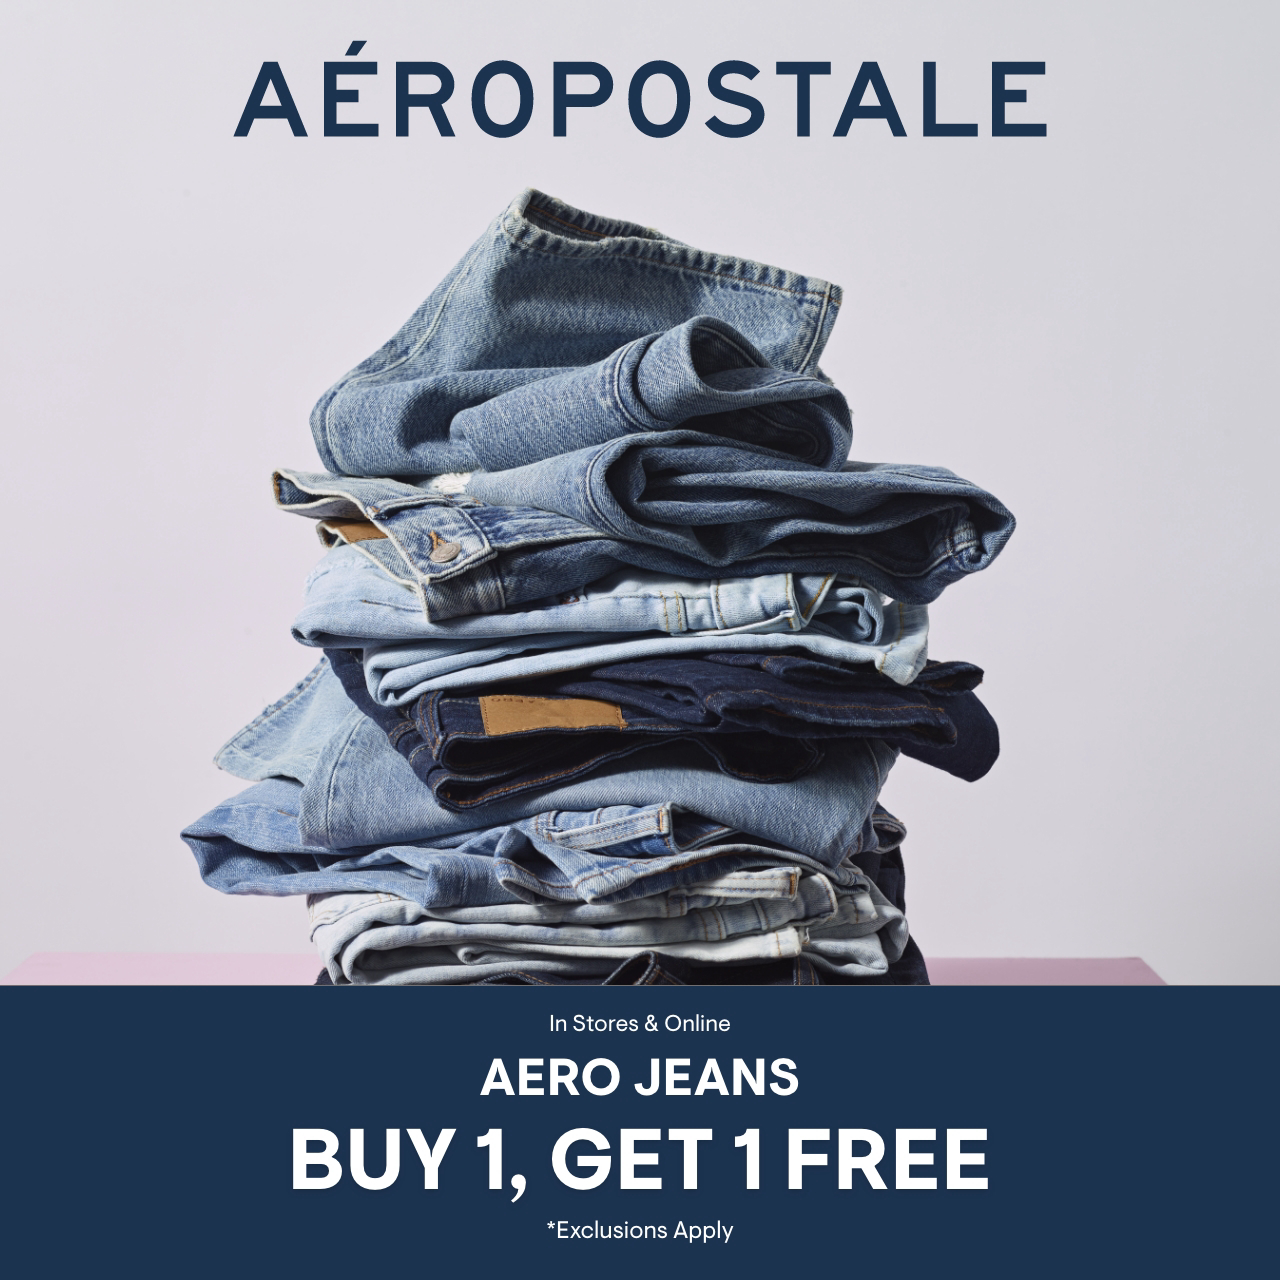 Aeropostale Campaign 6 Jeans Buy 1 Get 1 Free EN 1280x1280 1